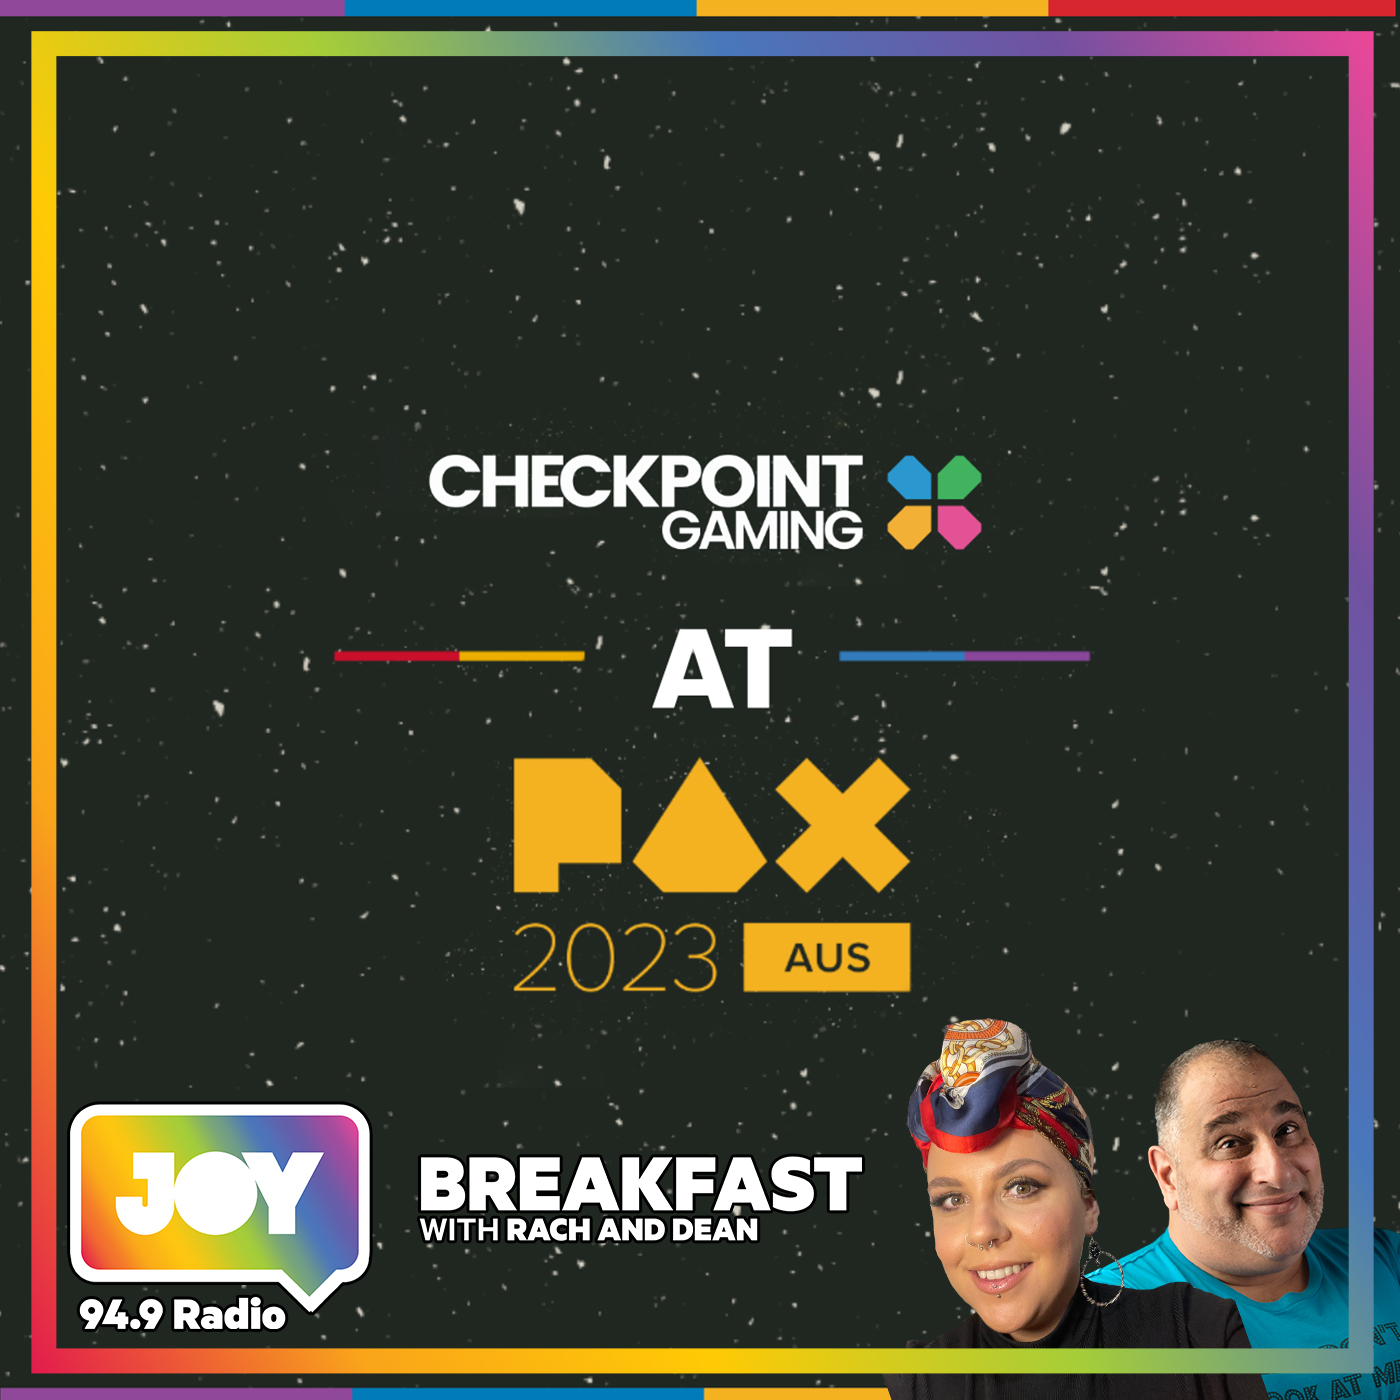 Checkpoint at PAX Australia